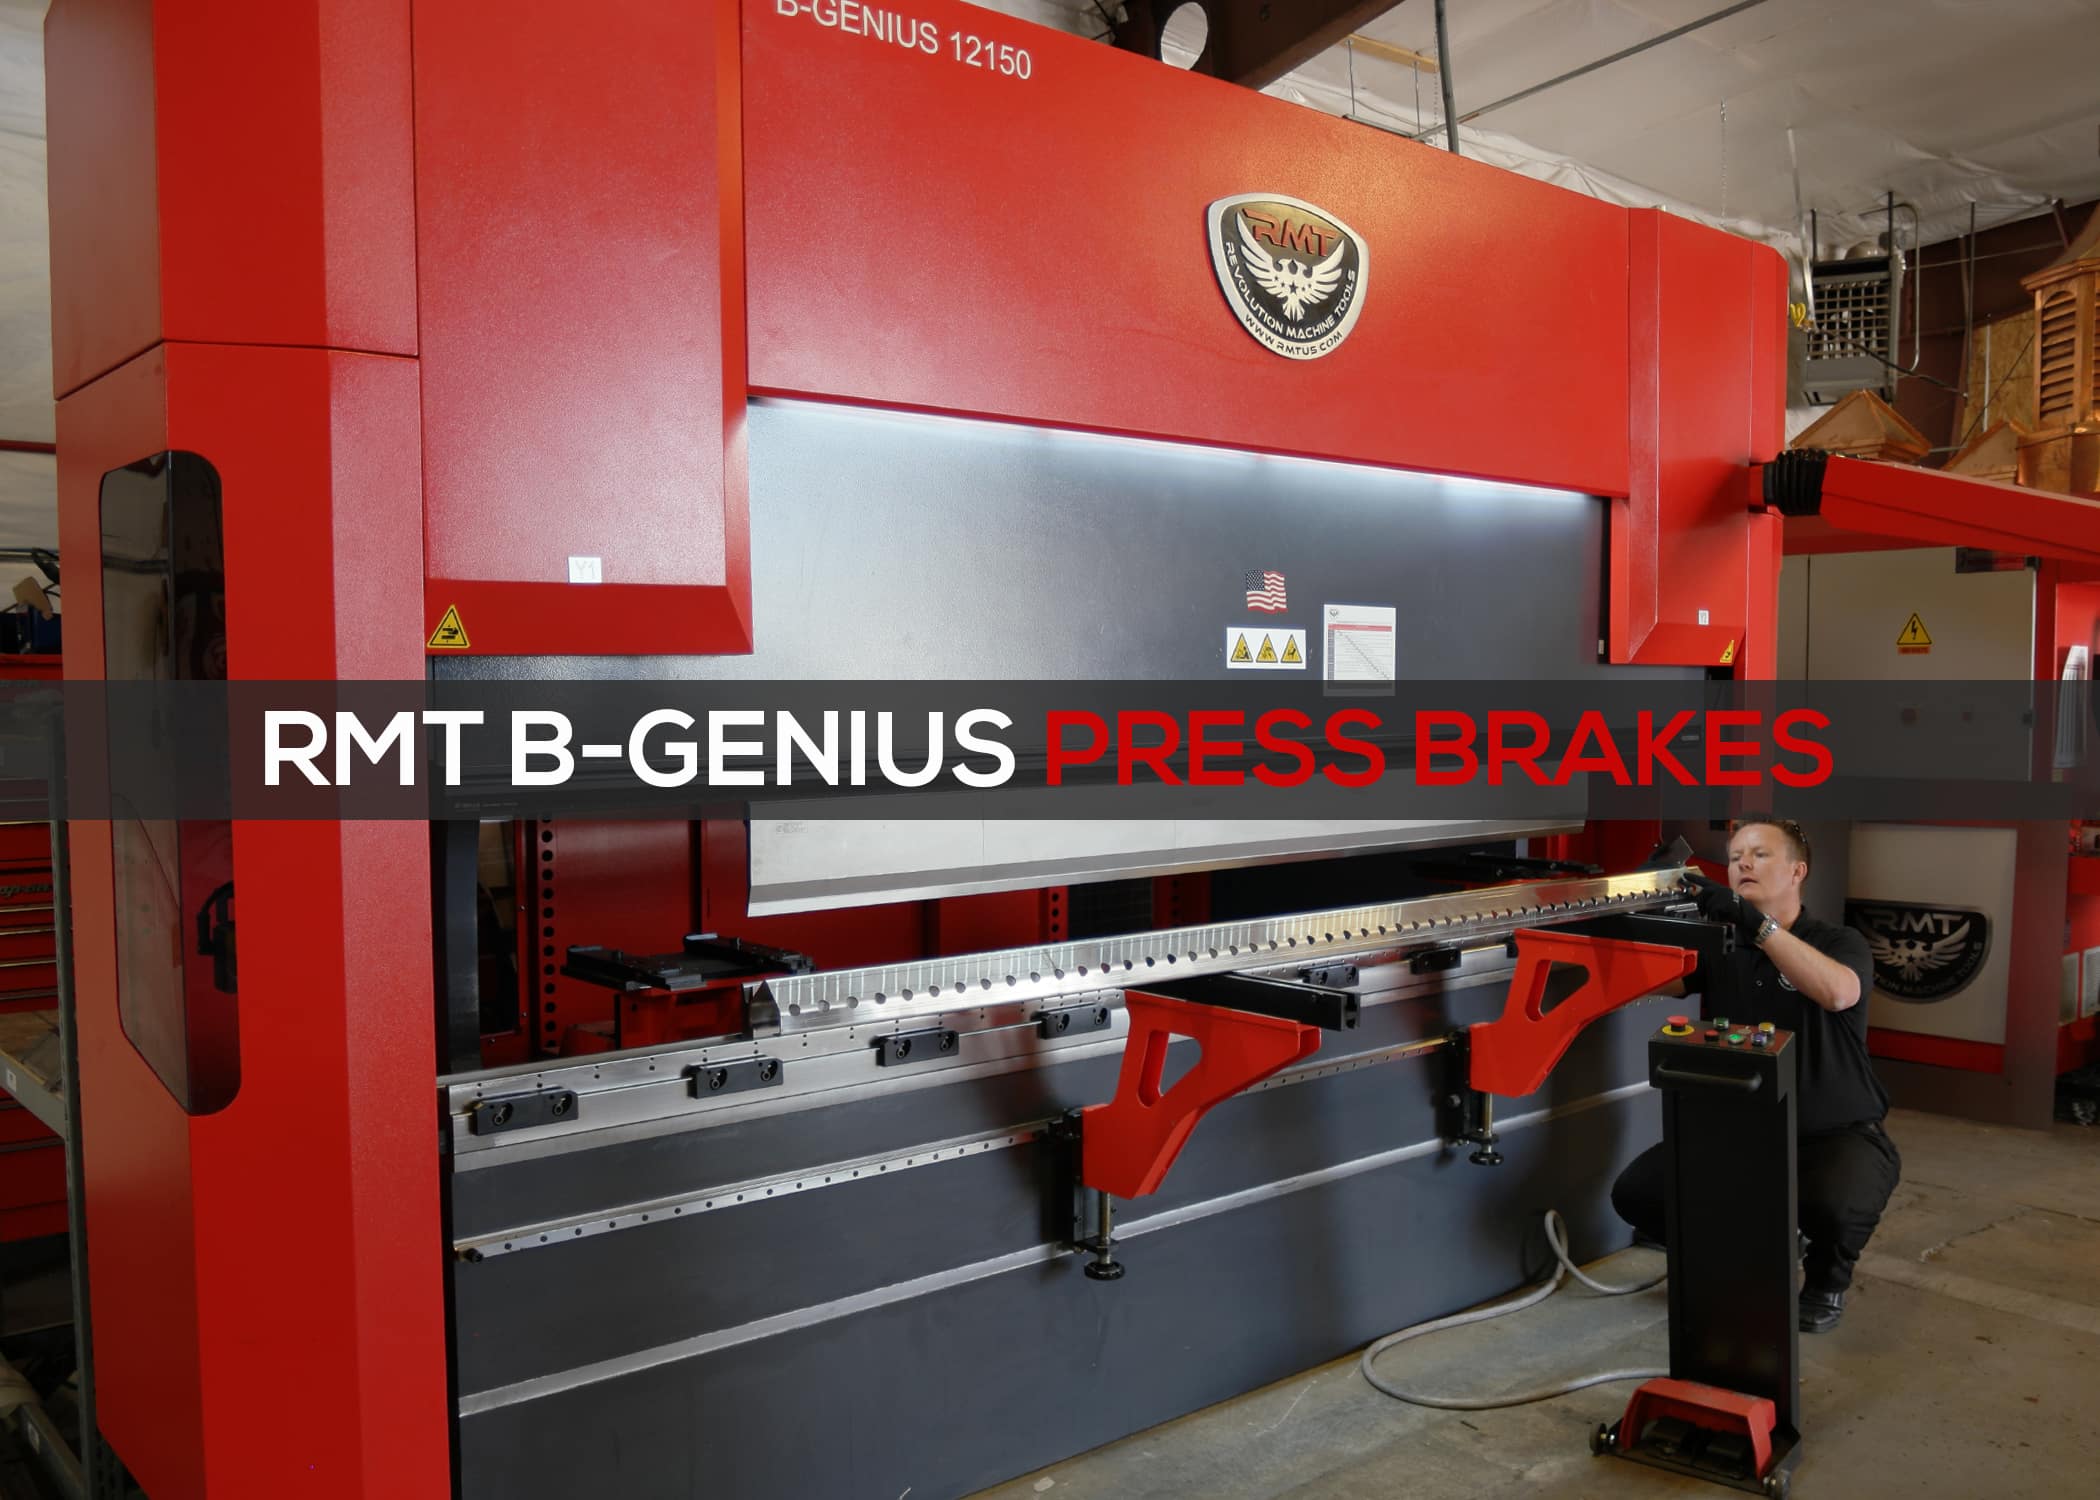 Spotlight on RMT B-GENIUS Press Brakes